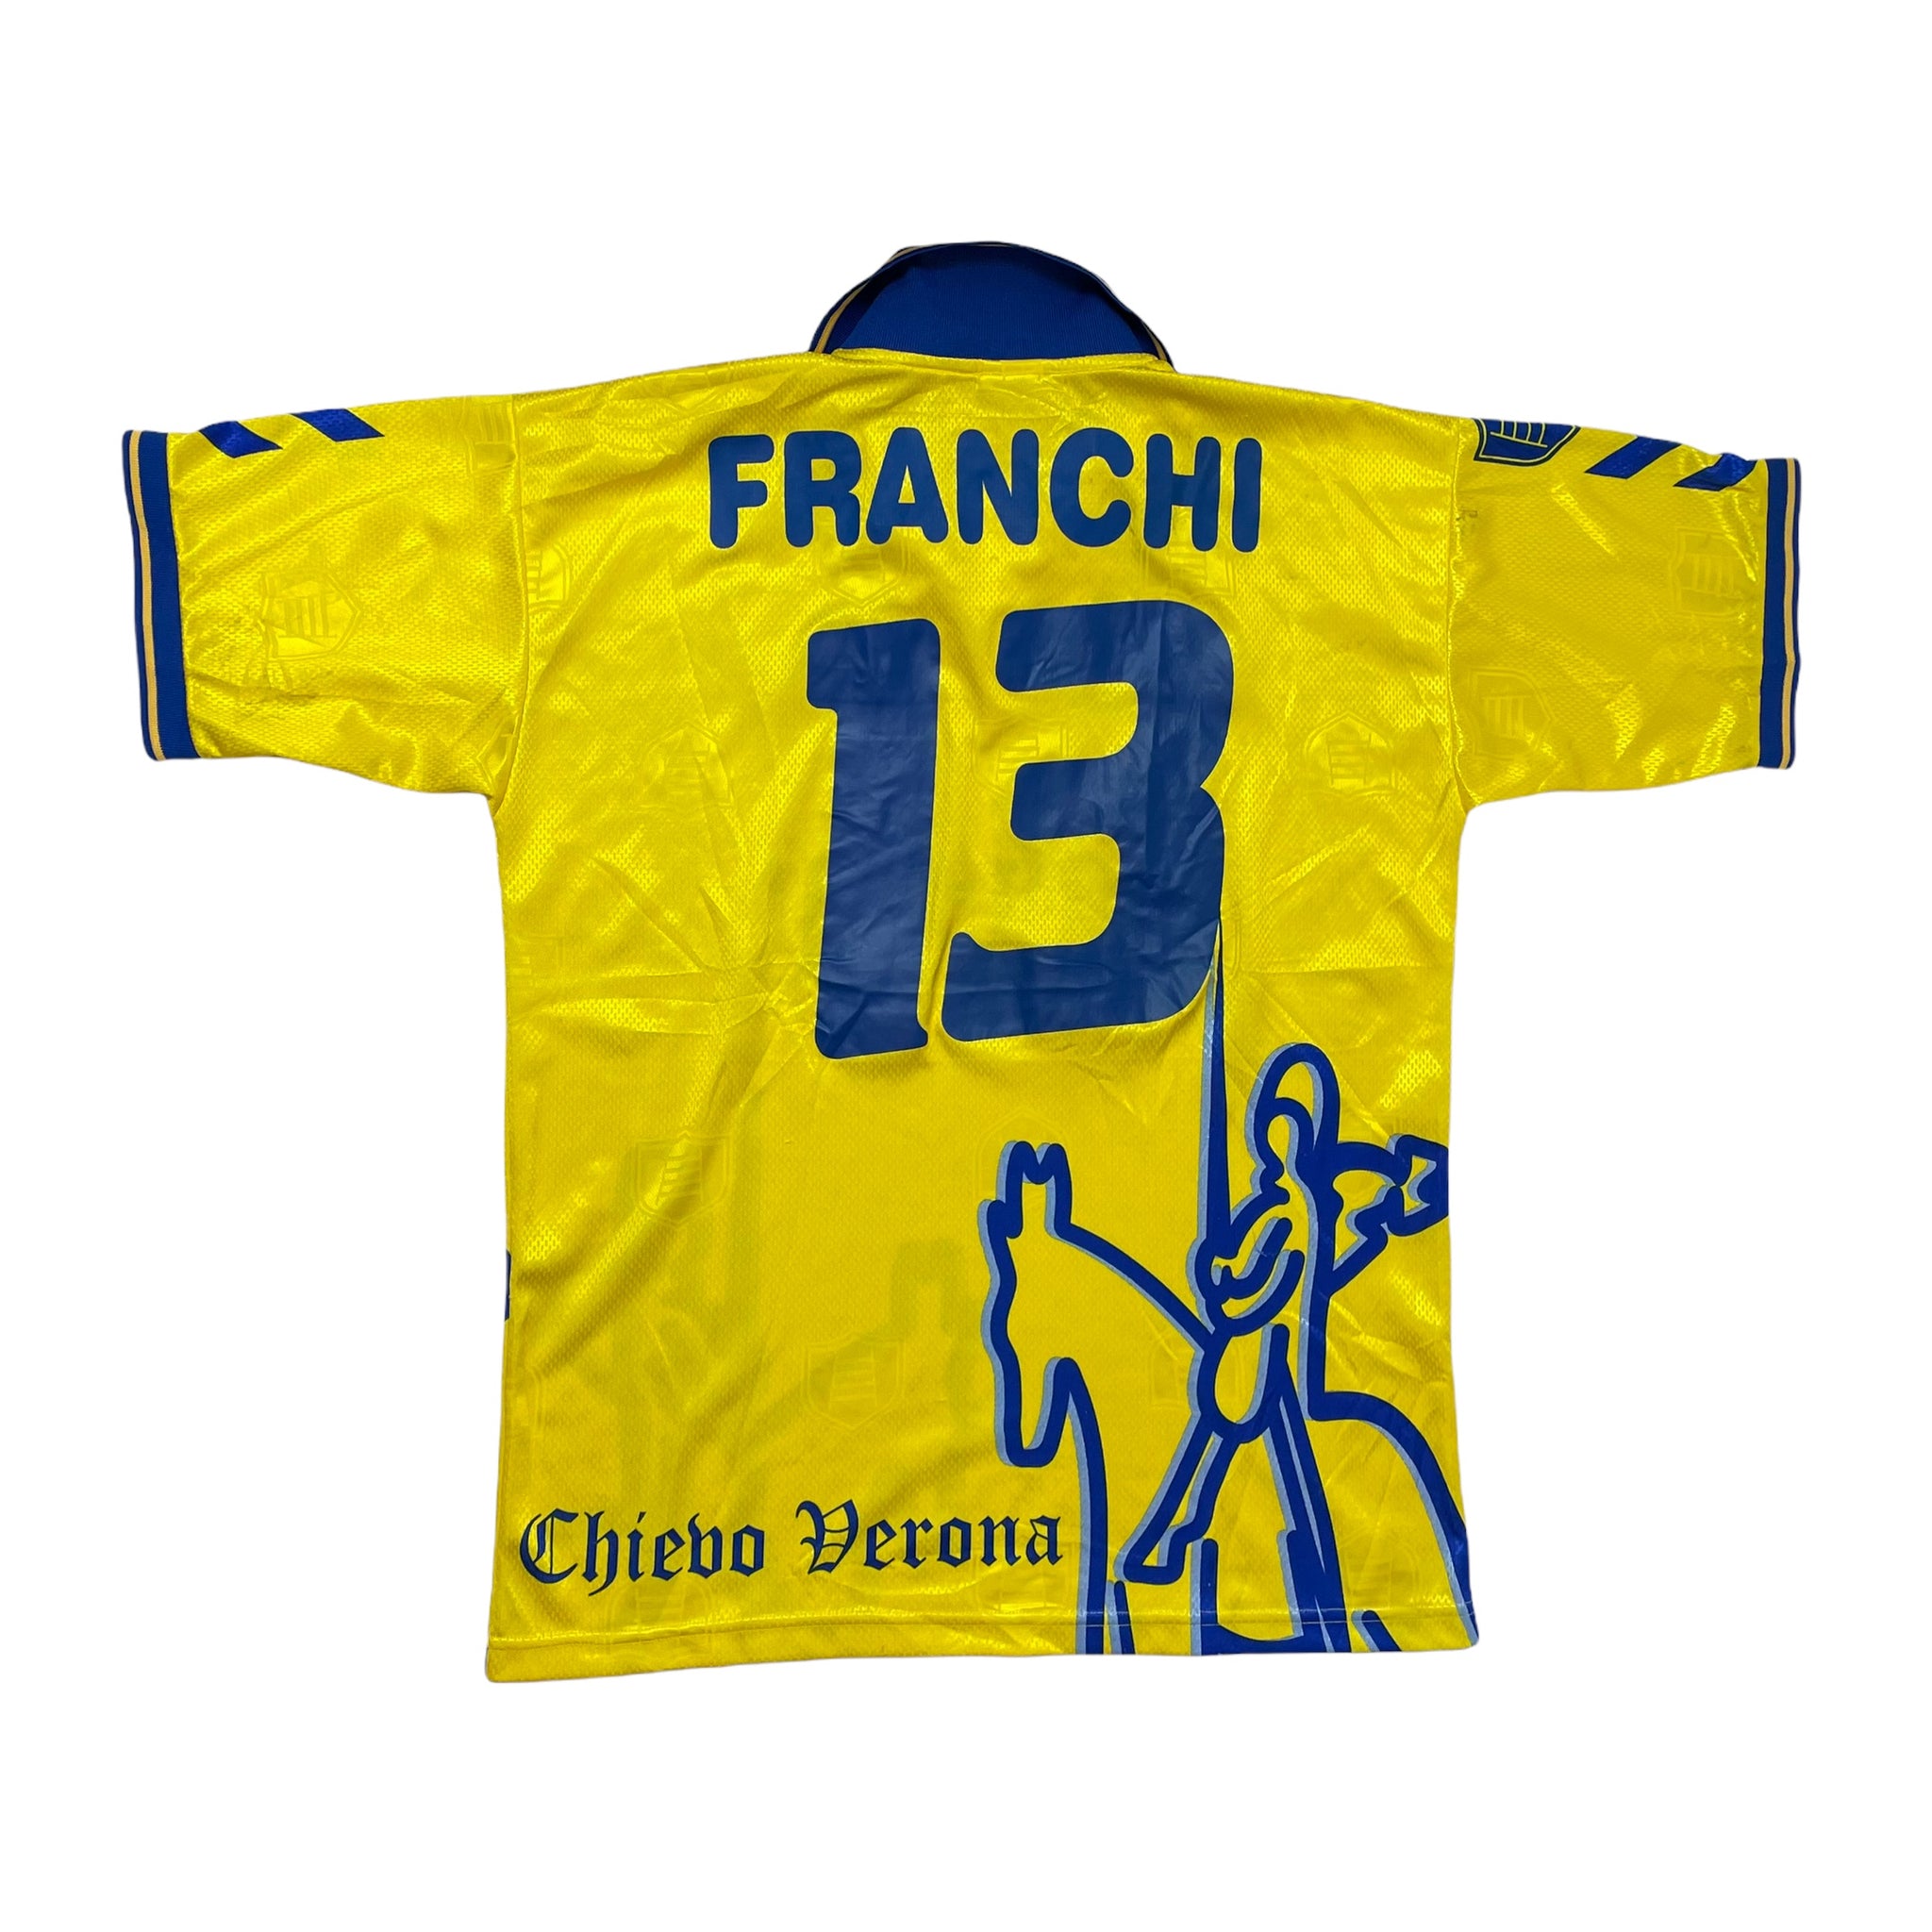 CHIEVO VERONA 2000/01 HOME FOOTBALL SHIRT ‘FRANCHI #13’ (XL)